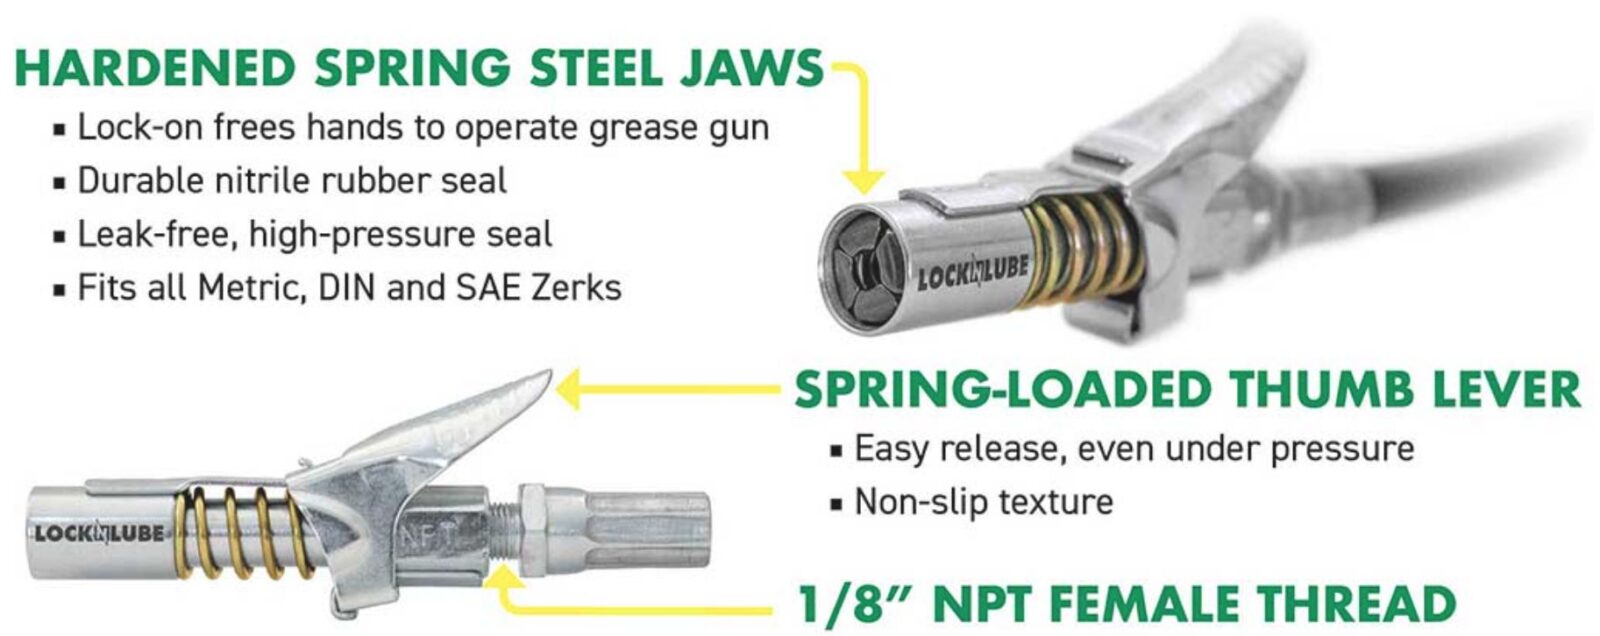 LockNLube grease gun features